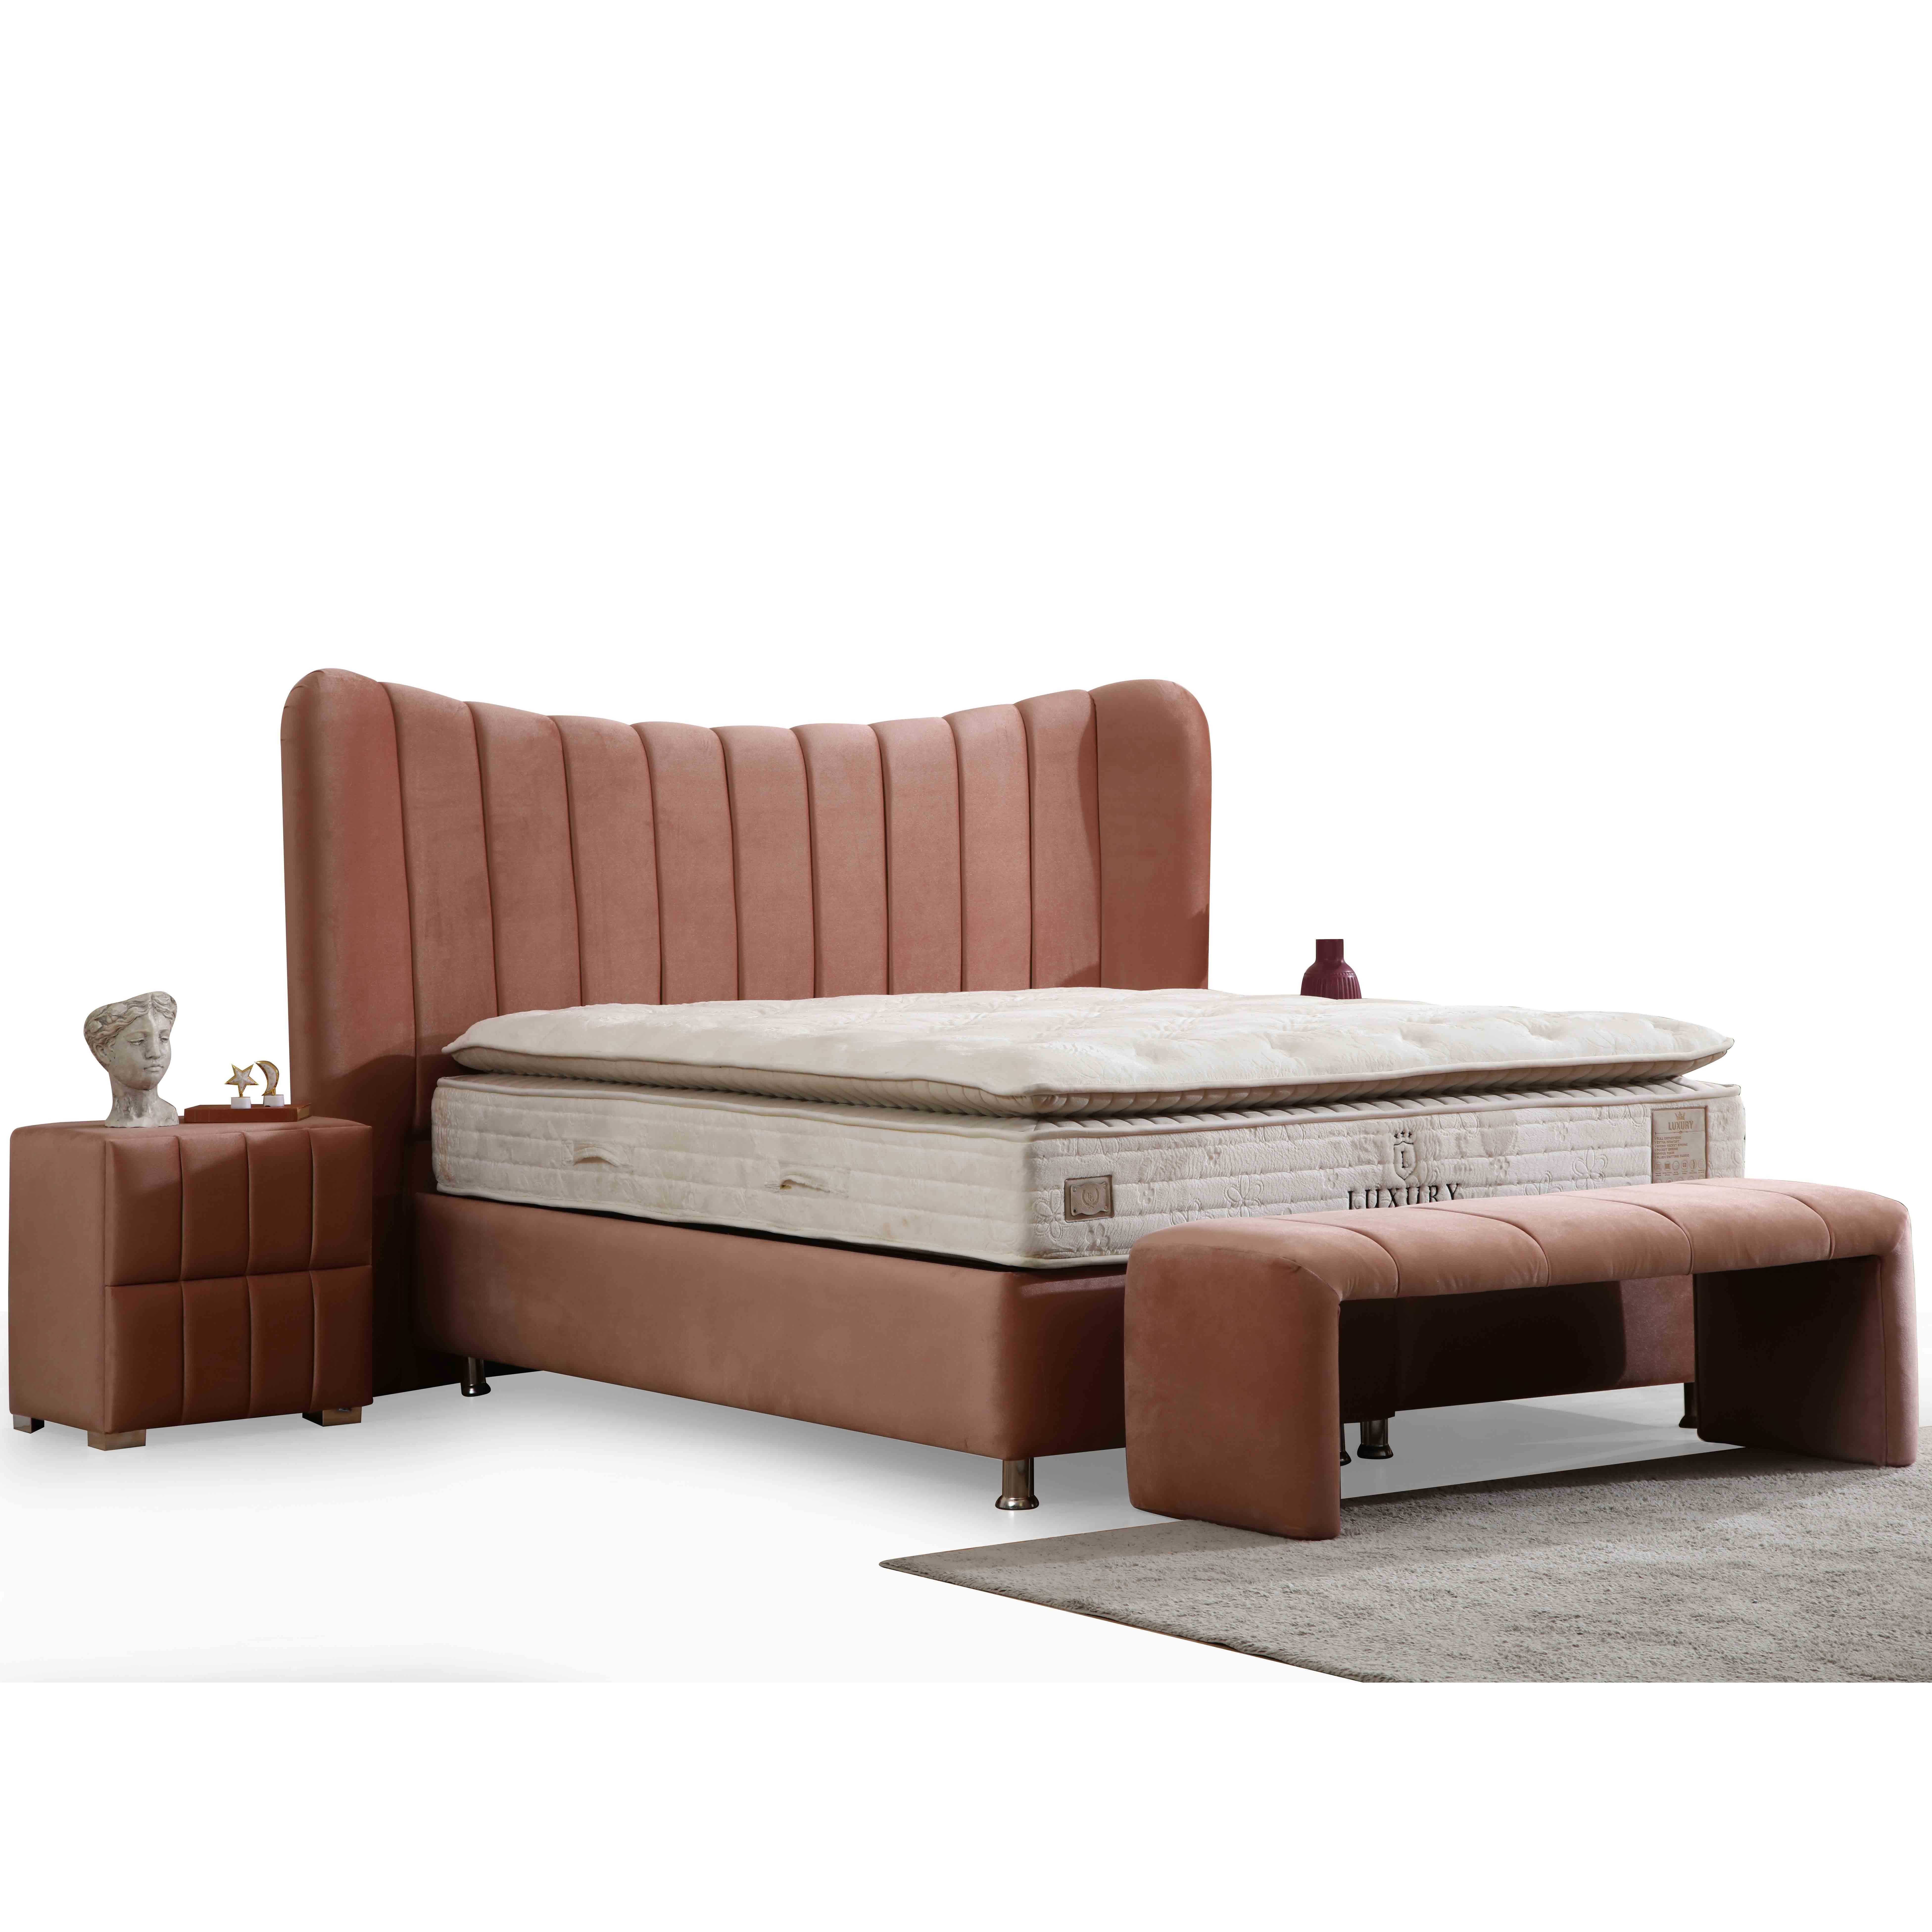 Rodos Bed With Storage 140x190 cm